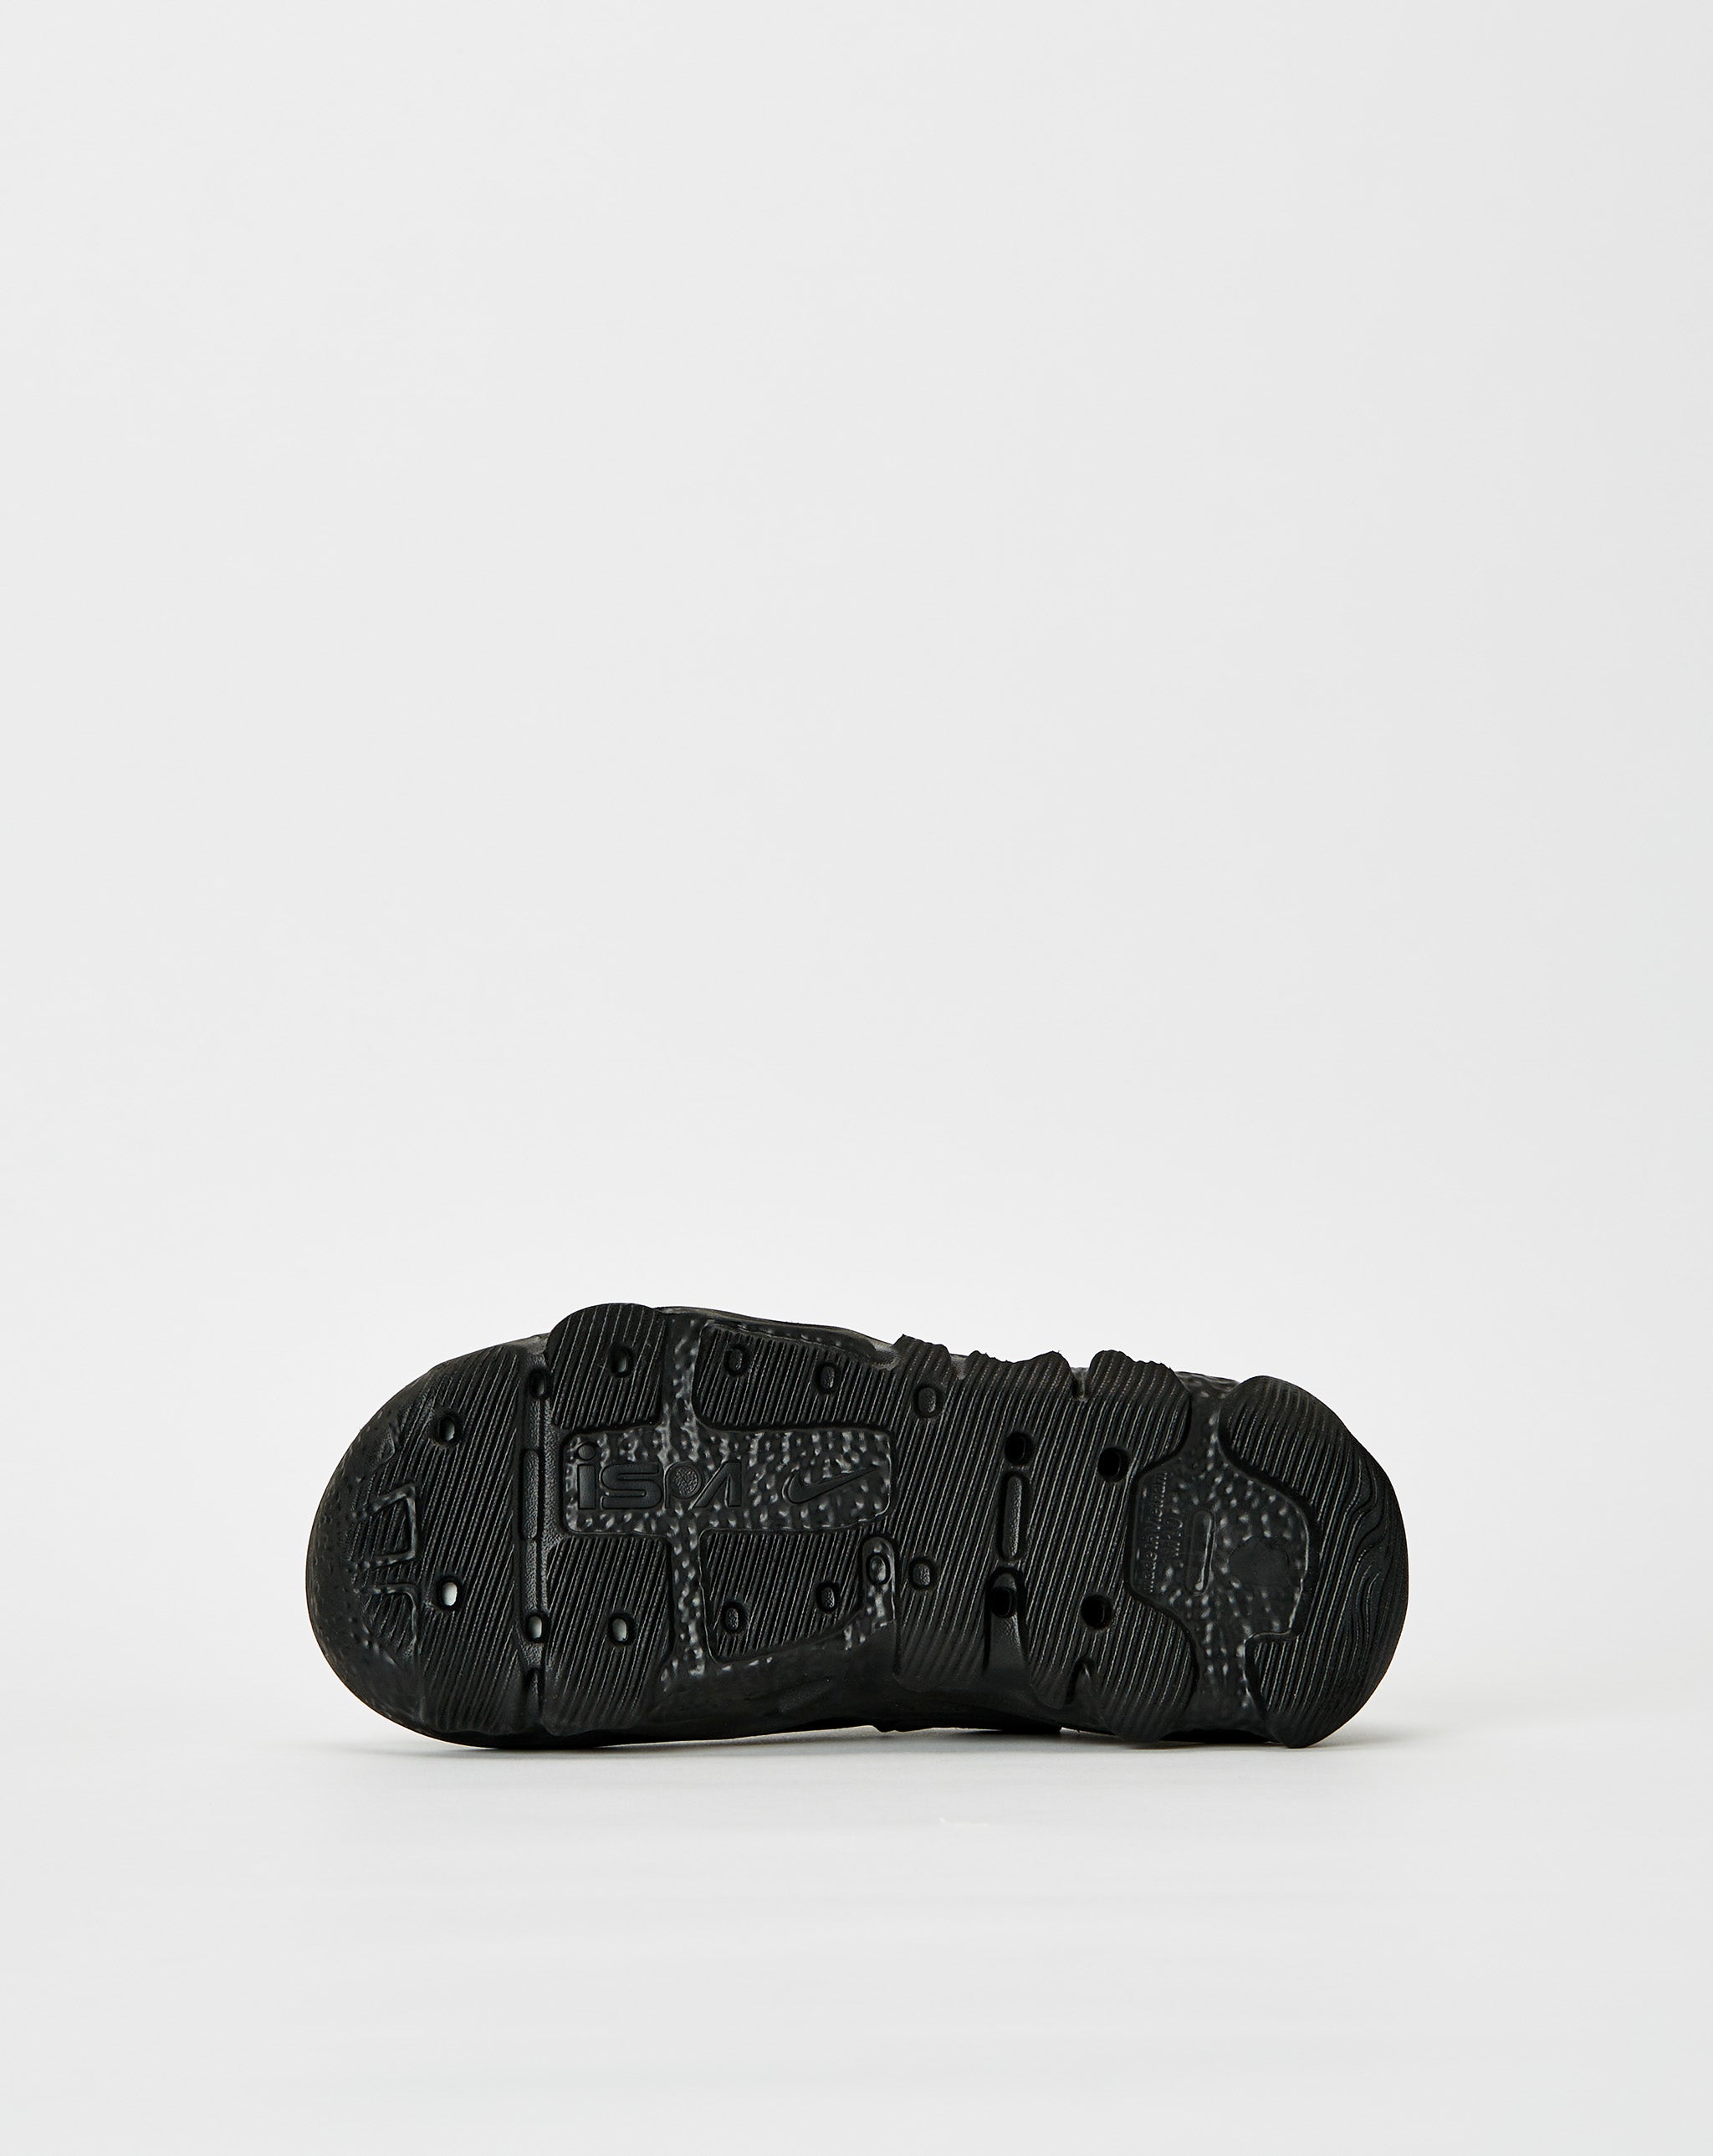 Nike ISPA Universal  - Cheap Atelier-lumieres Jordan outlet